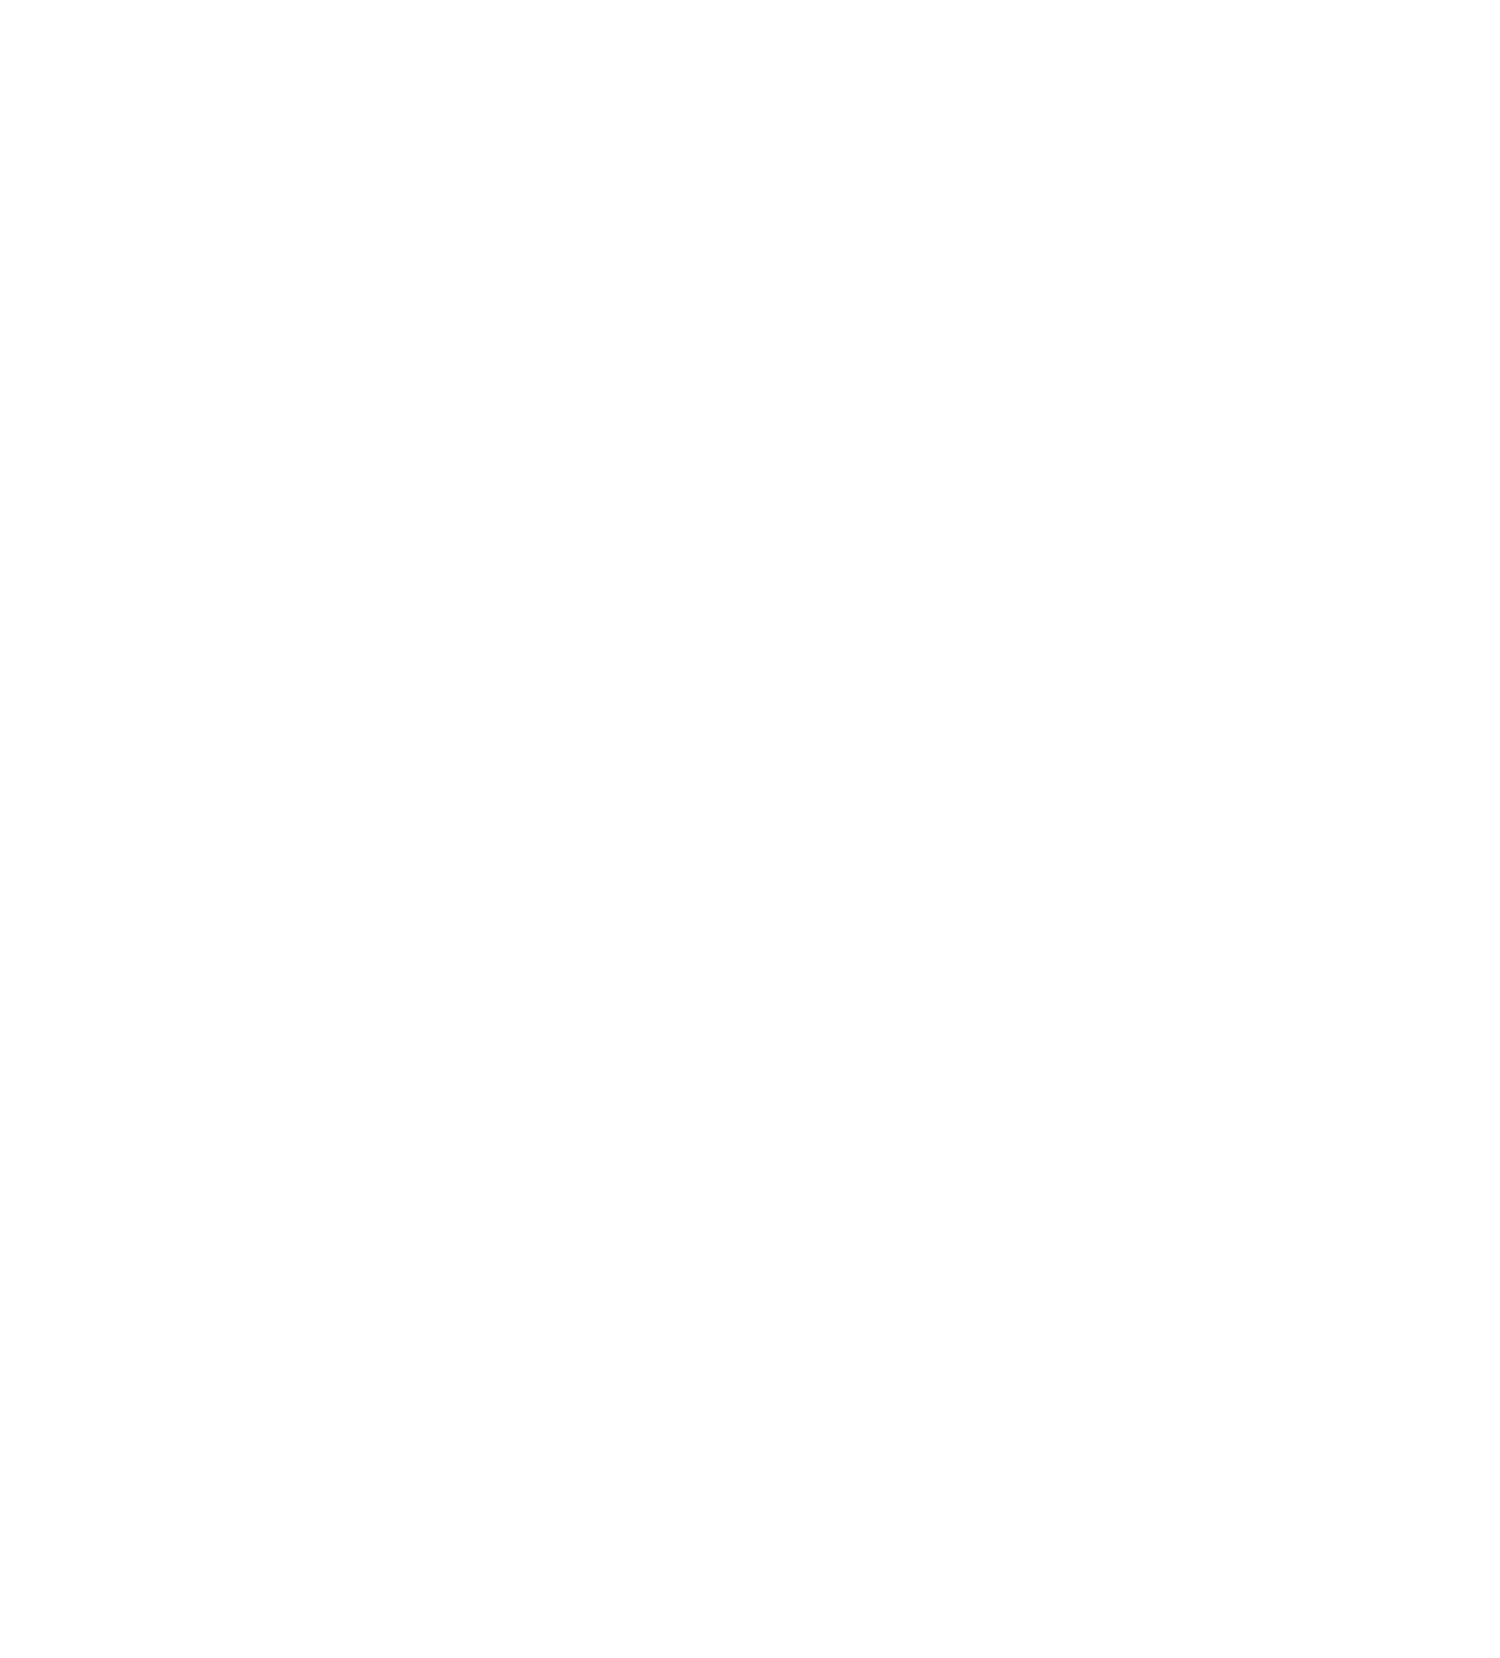 Joshua Tucker Photography